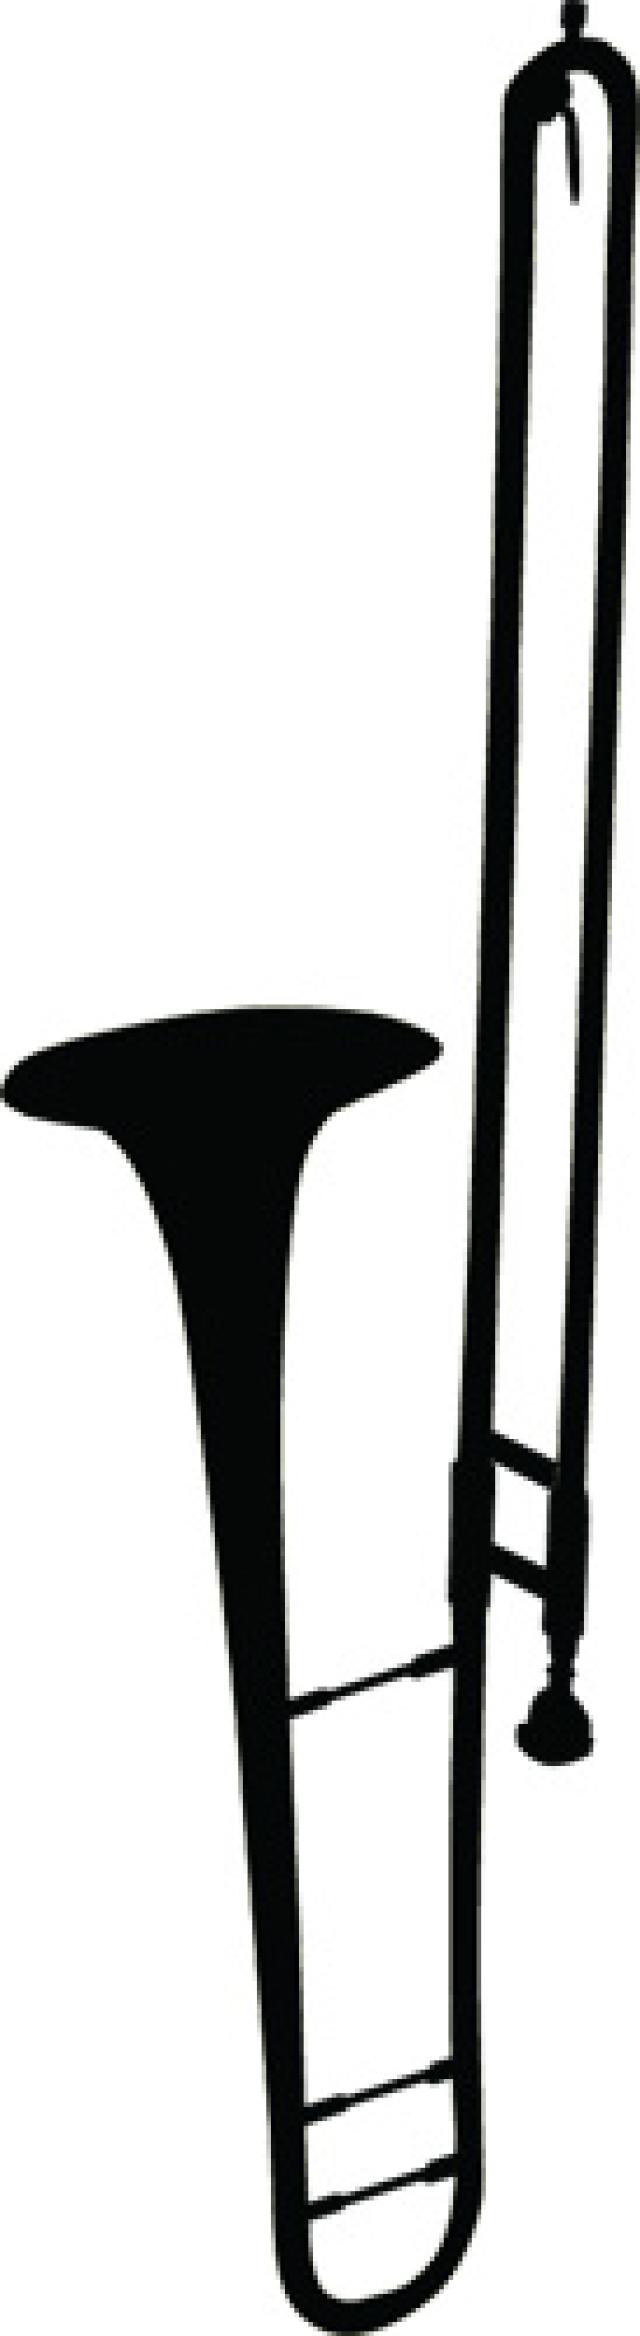 Trombone silhouette – cfxq 